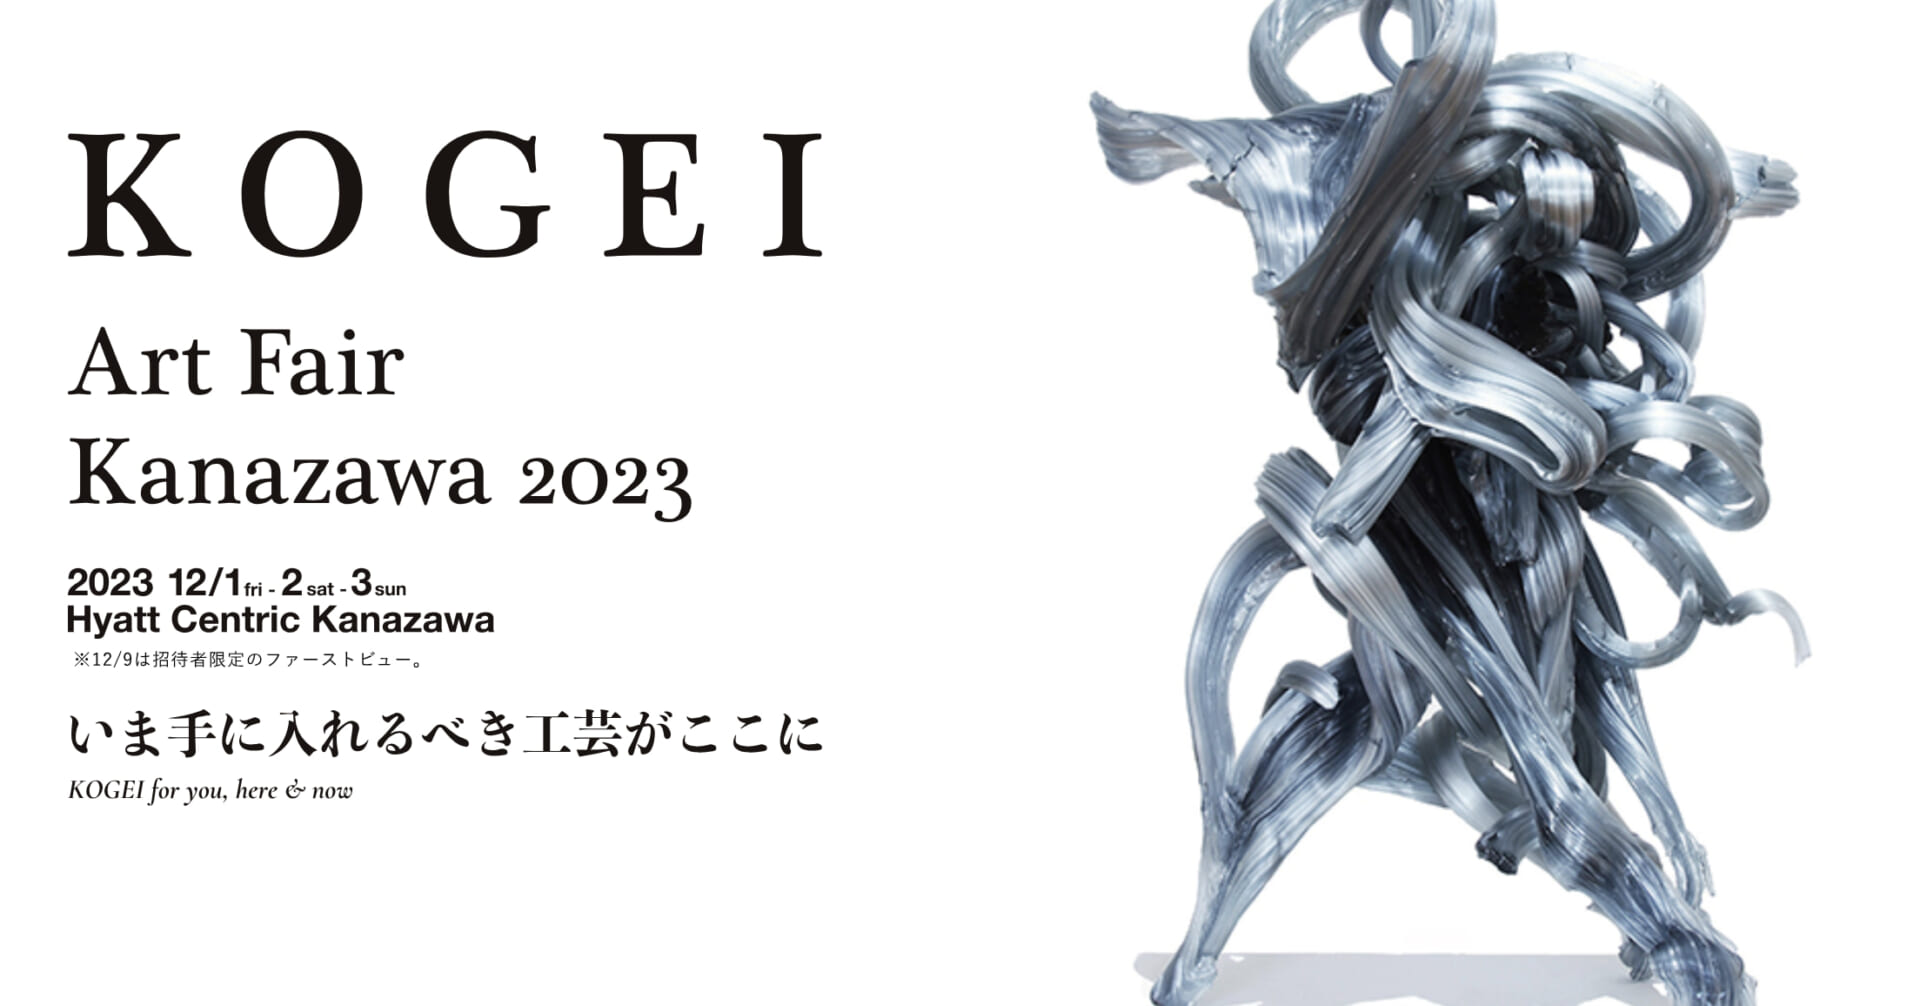 KOGEI ART FAIR 2023